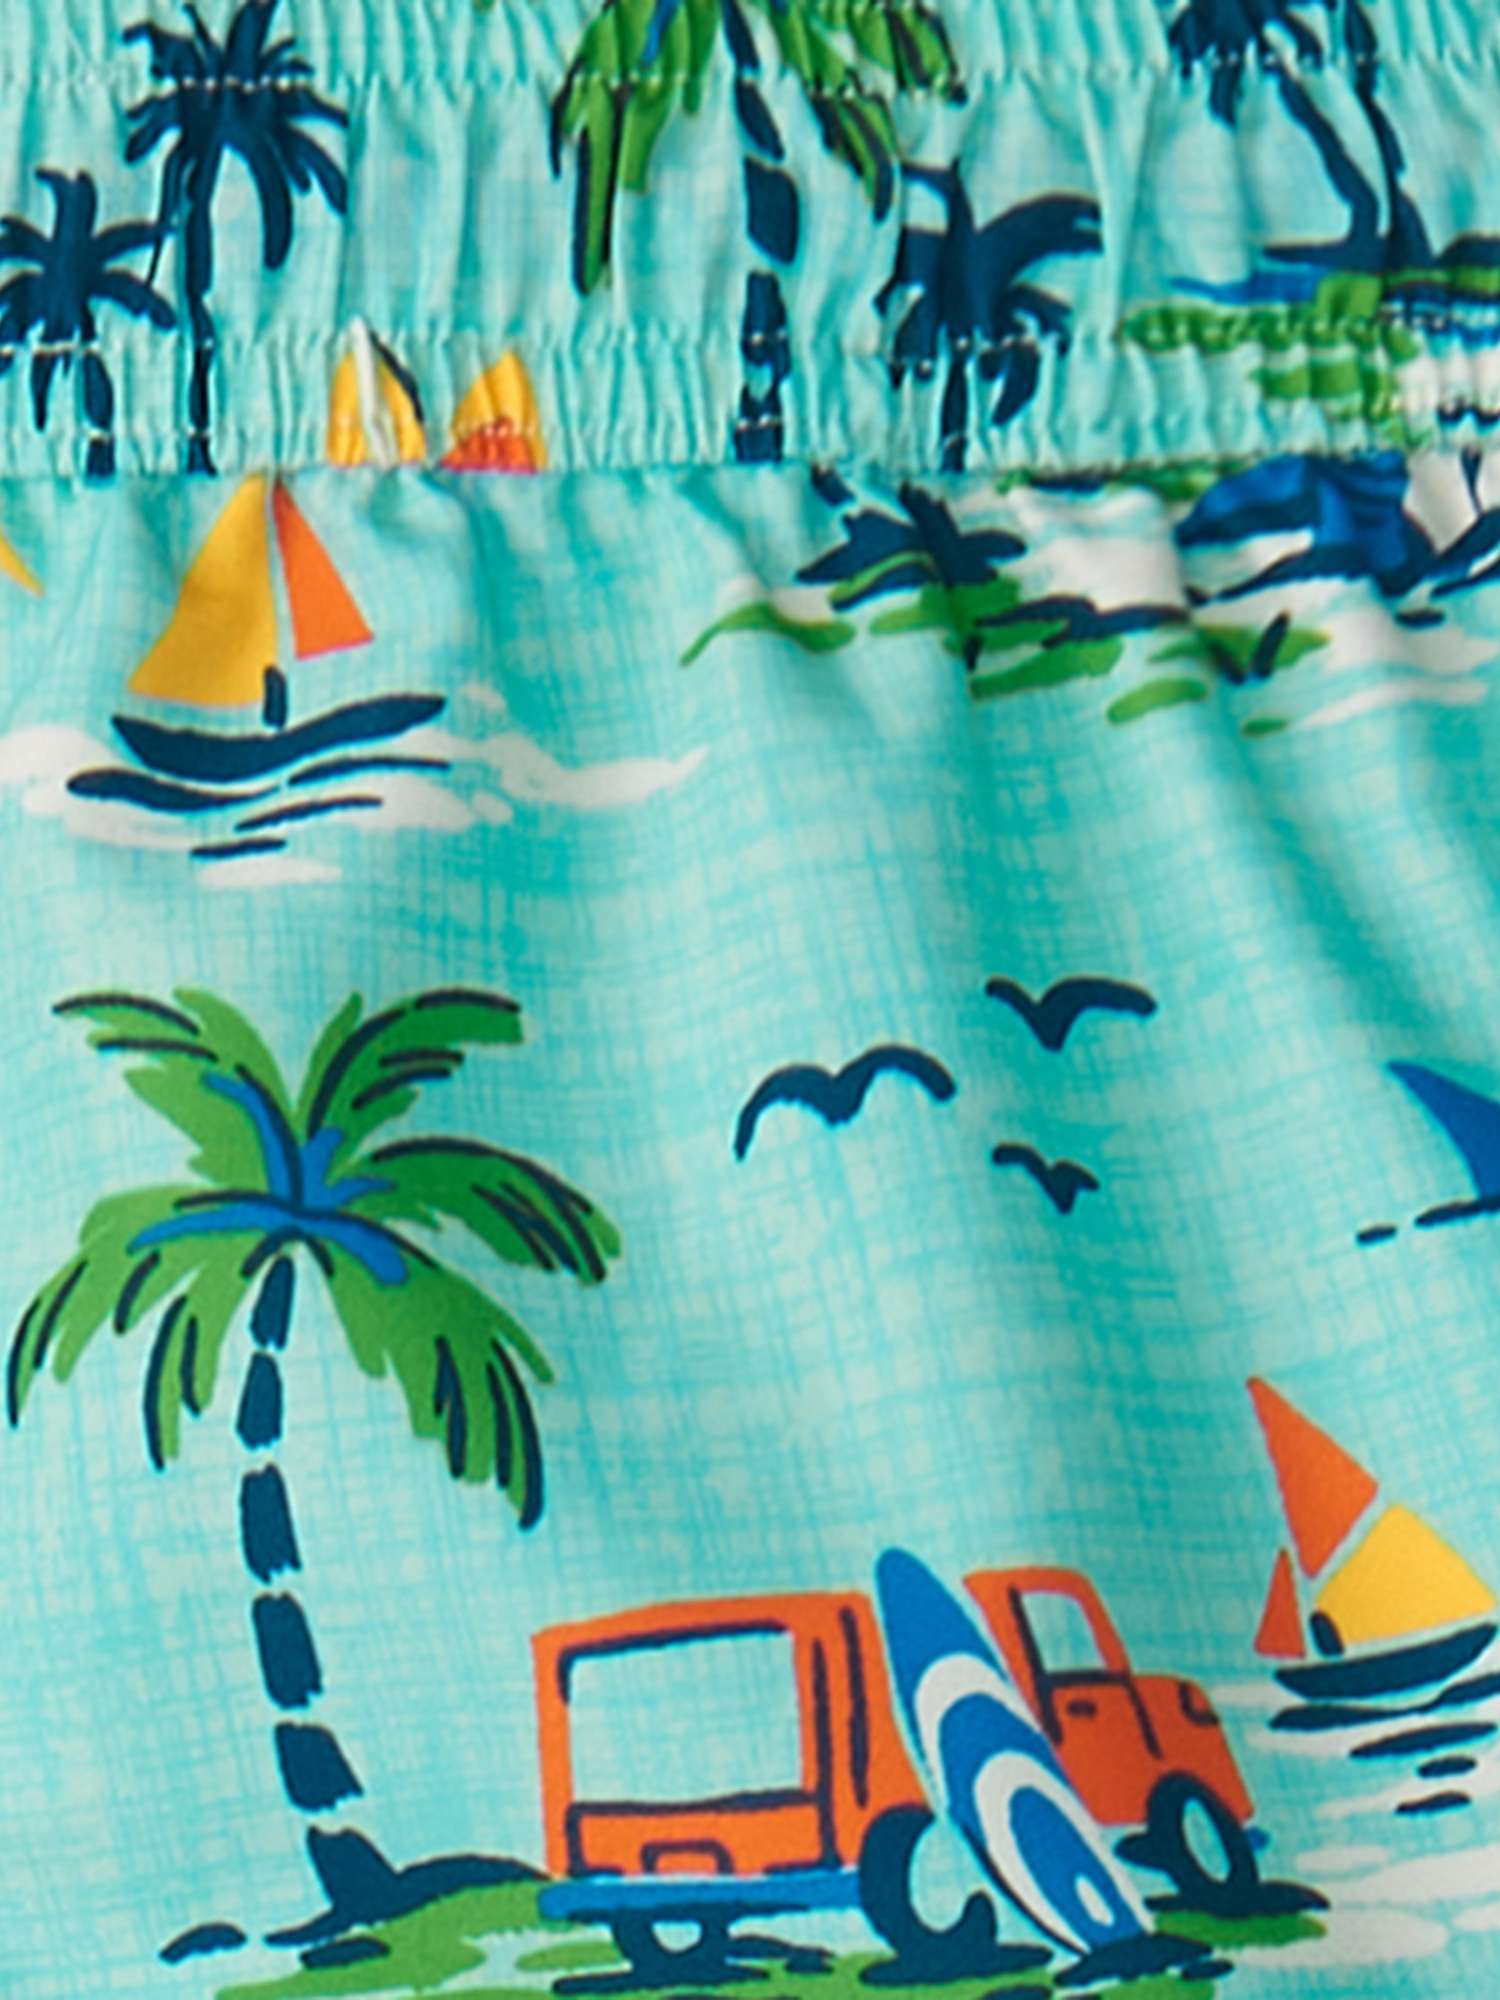 Buy Hatley Kids' Vintage Holiday Print Board Shorts, Aruba Blue Online at johnlewis.com